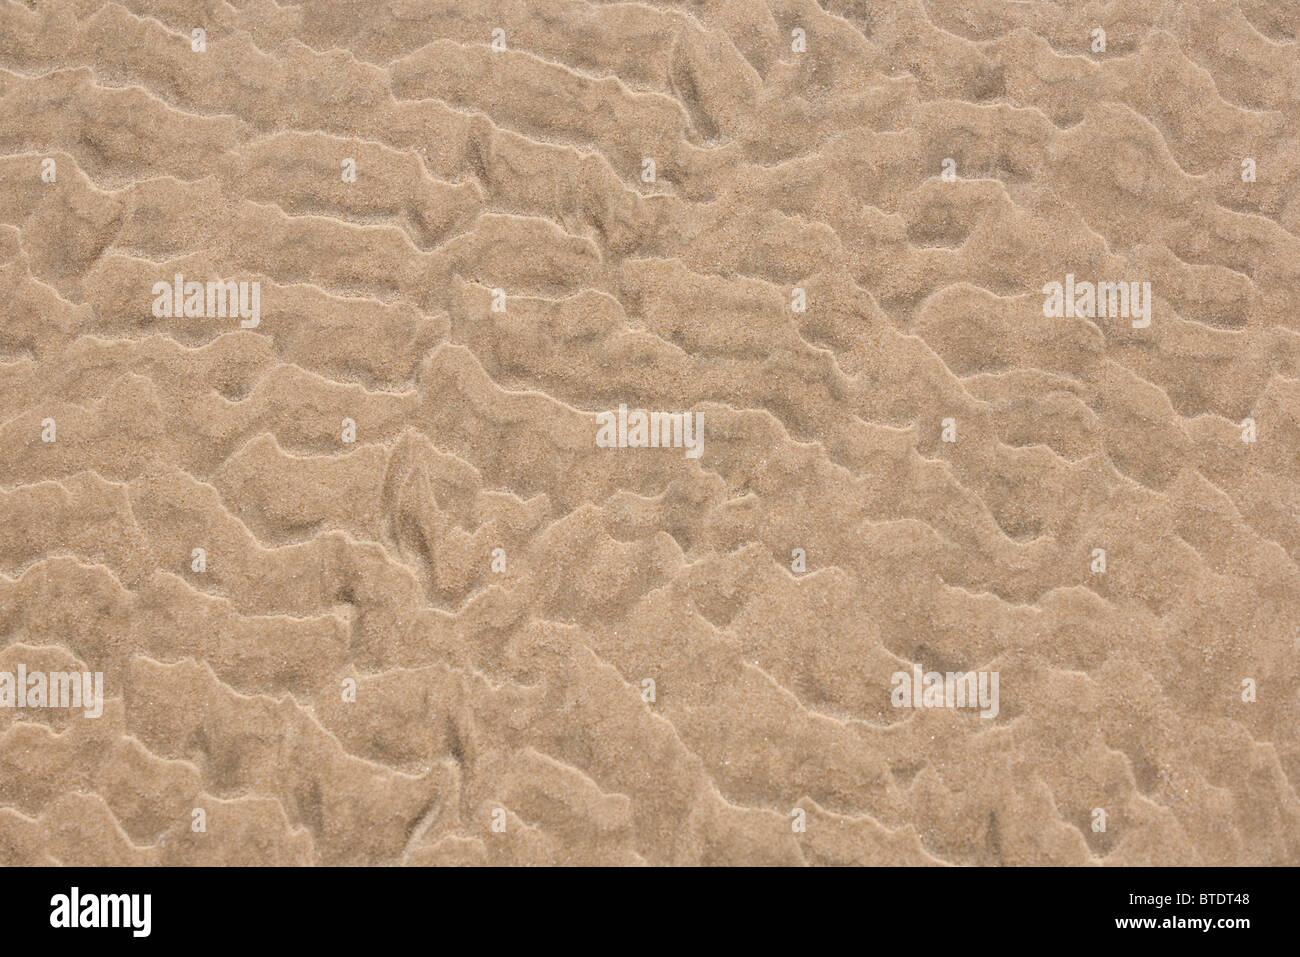 Ripple patterns in beach sand Stock Photo